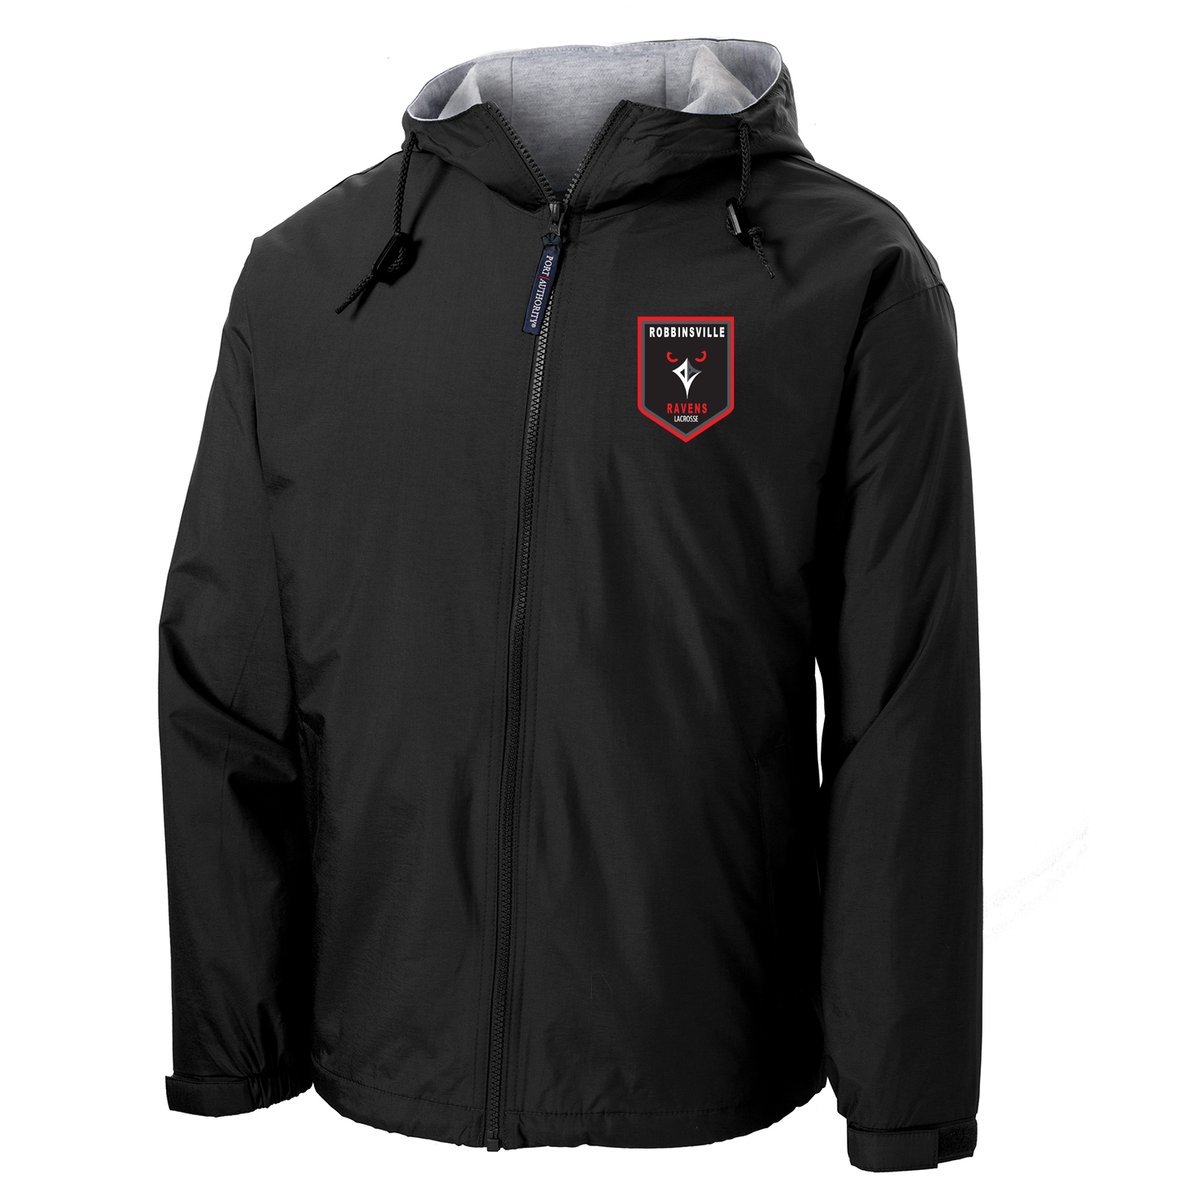 Robbinsville Lacrosse Association Hooded Jacket